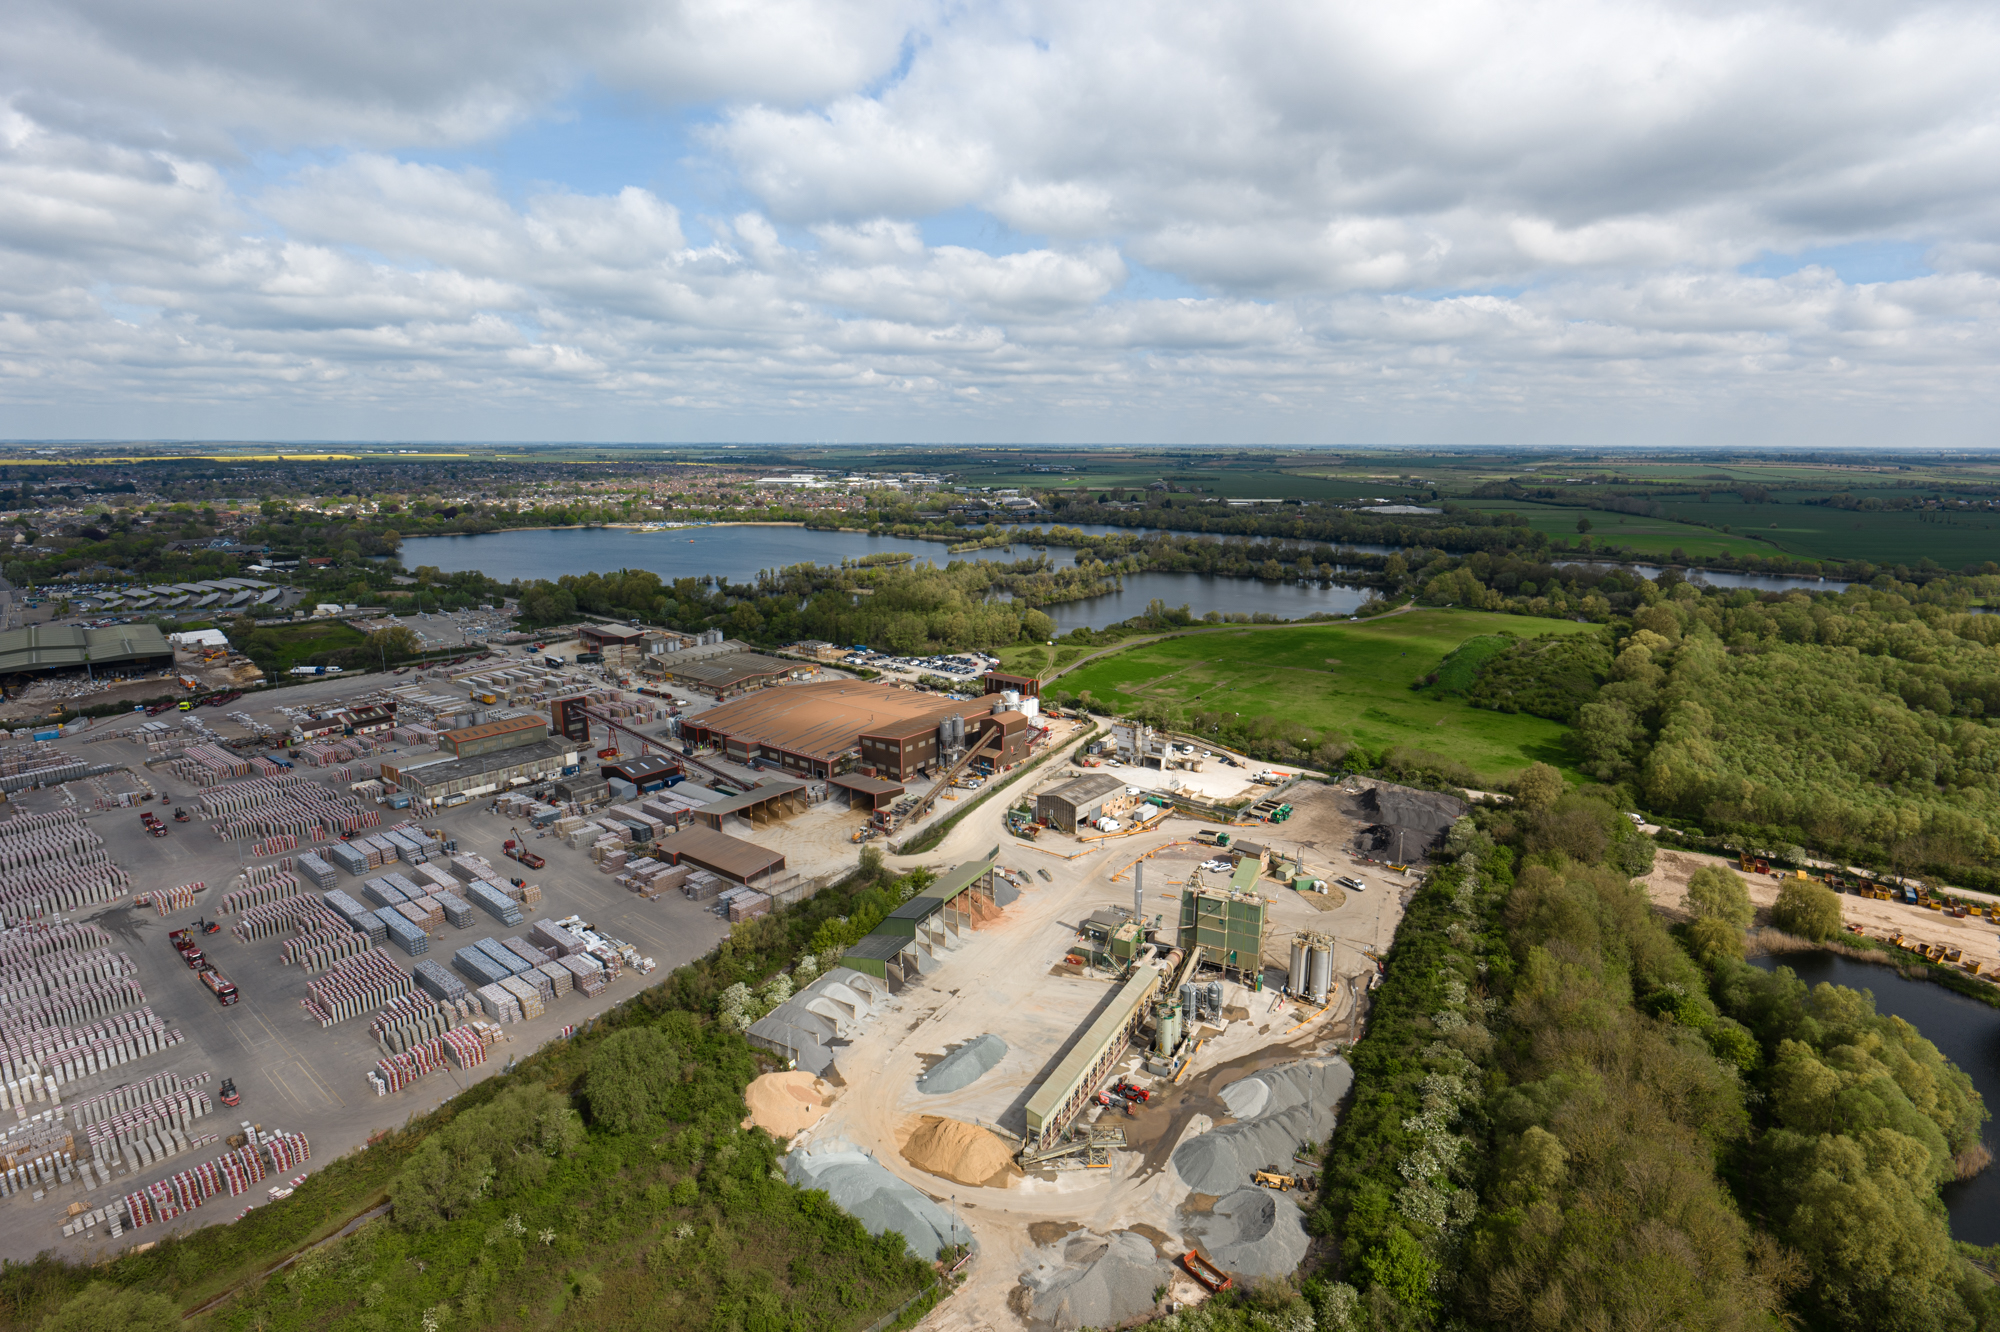 DJI Inspire 3 aerial image of industrial estate